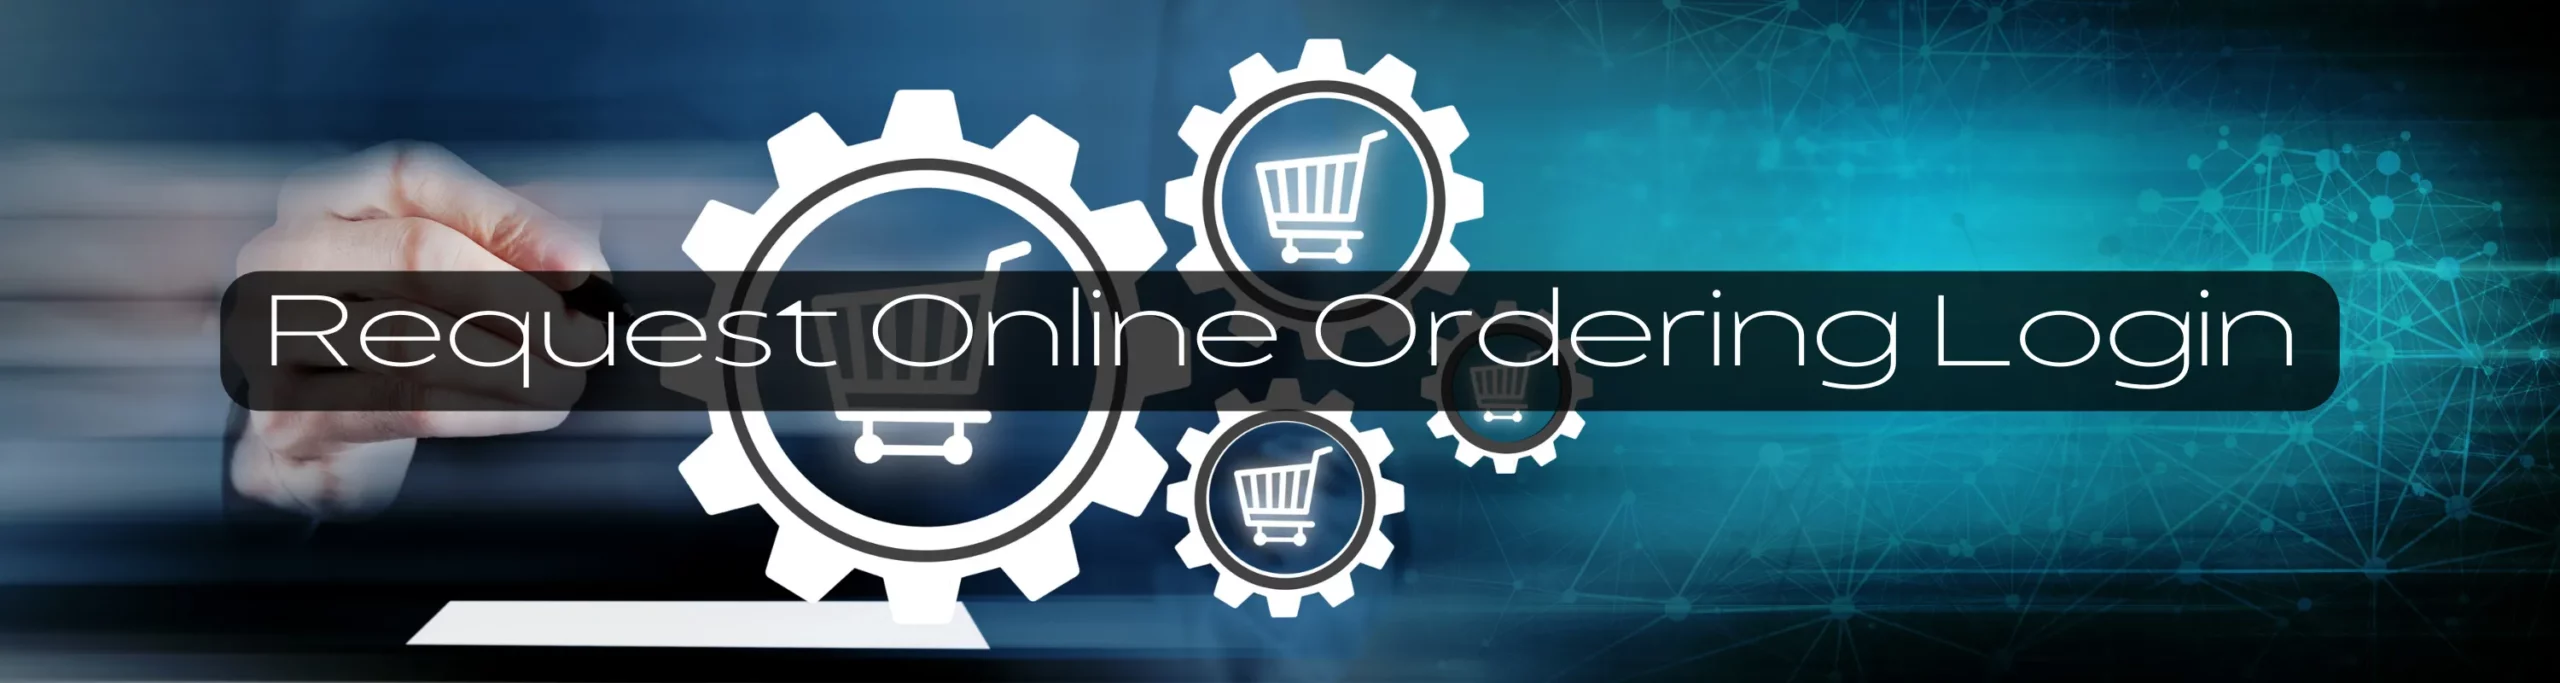 Online Ordering Request